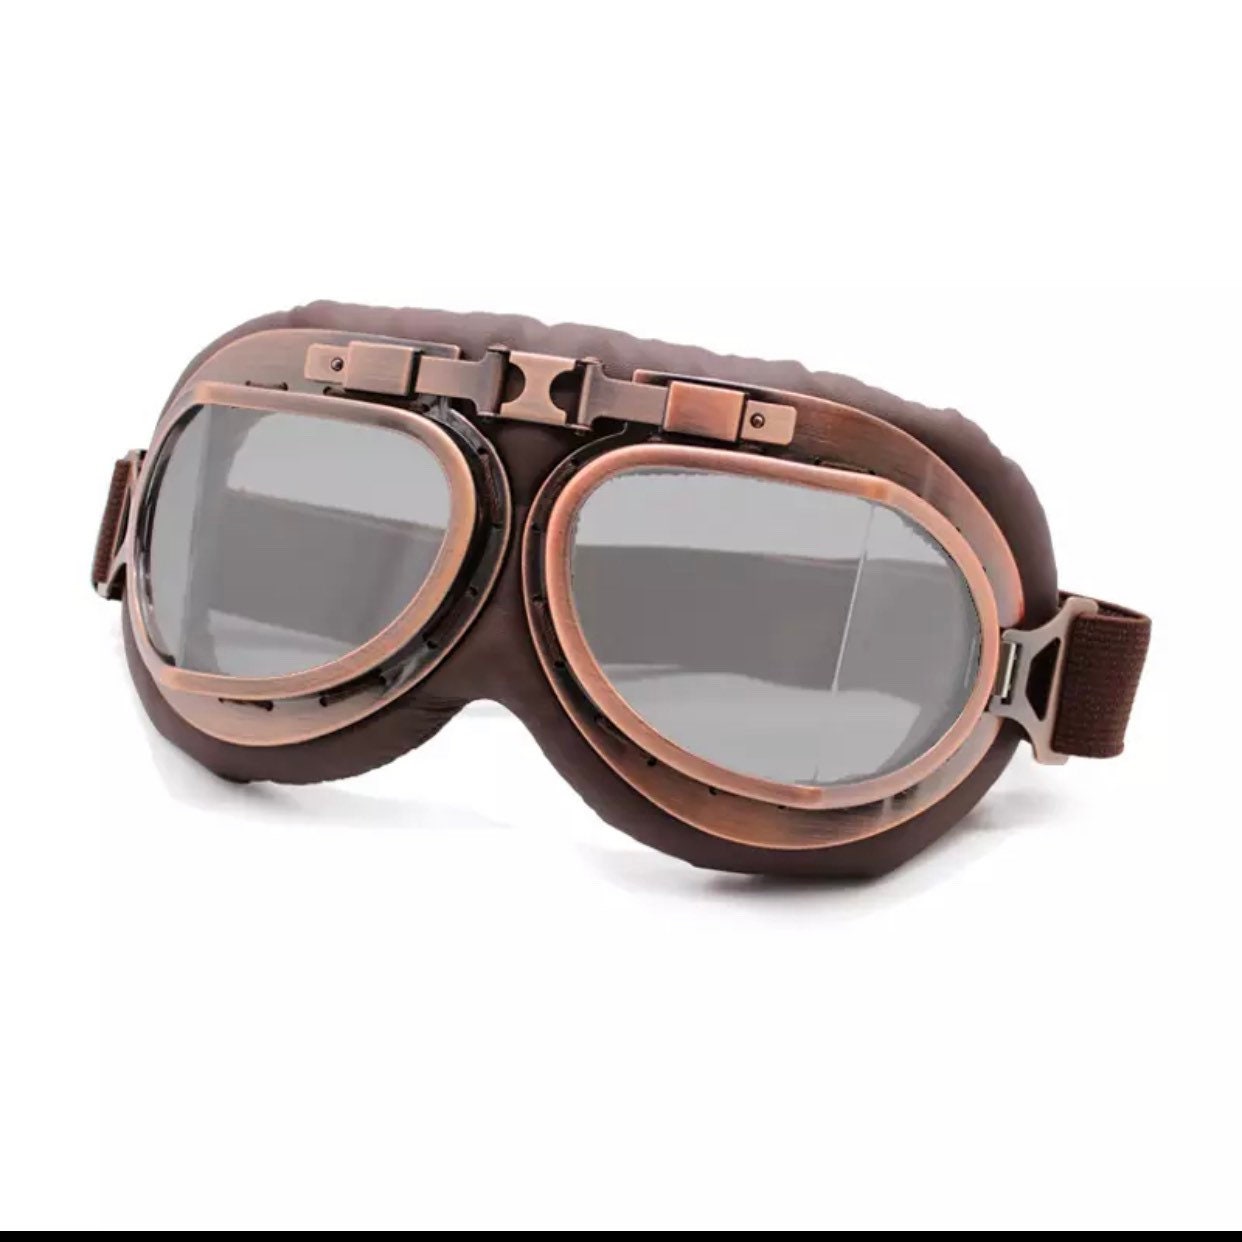 Antique / Vintage Distressed Goggles Safety Glasses Oddity Military Aviation Mad Max Accessoires Zonnebrillen & Eyewear Sportbrillen Motorcycle Steampunk 